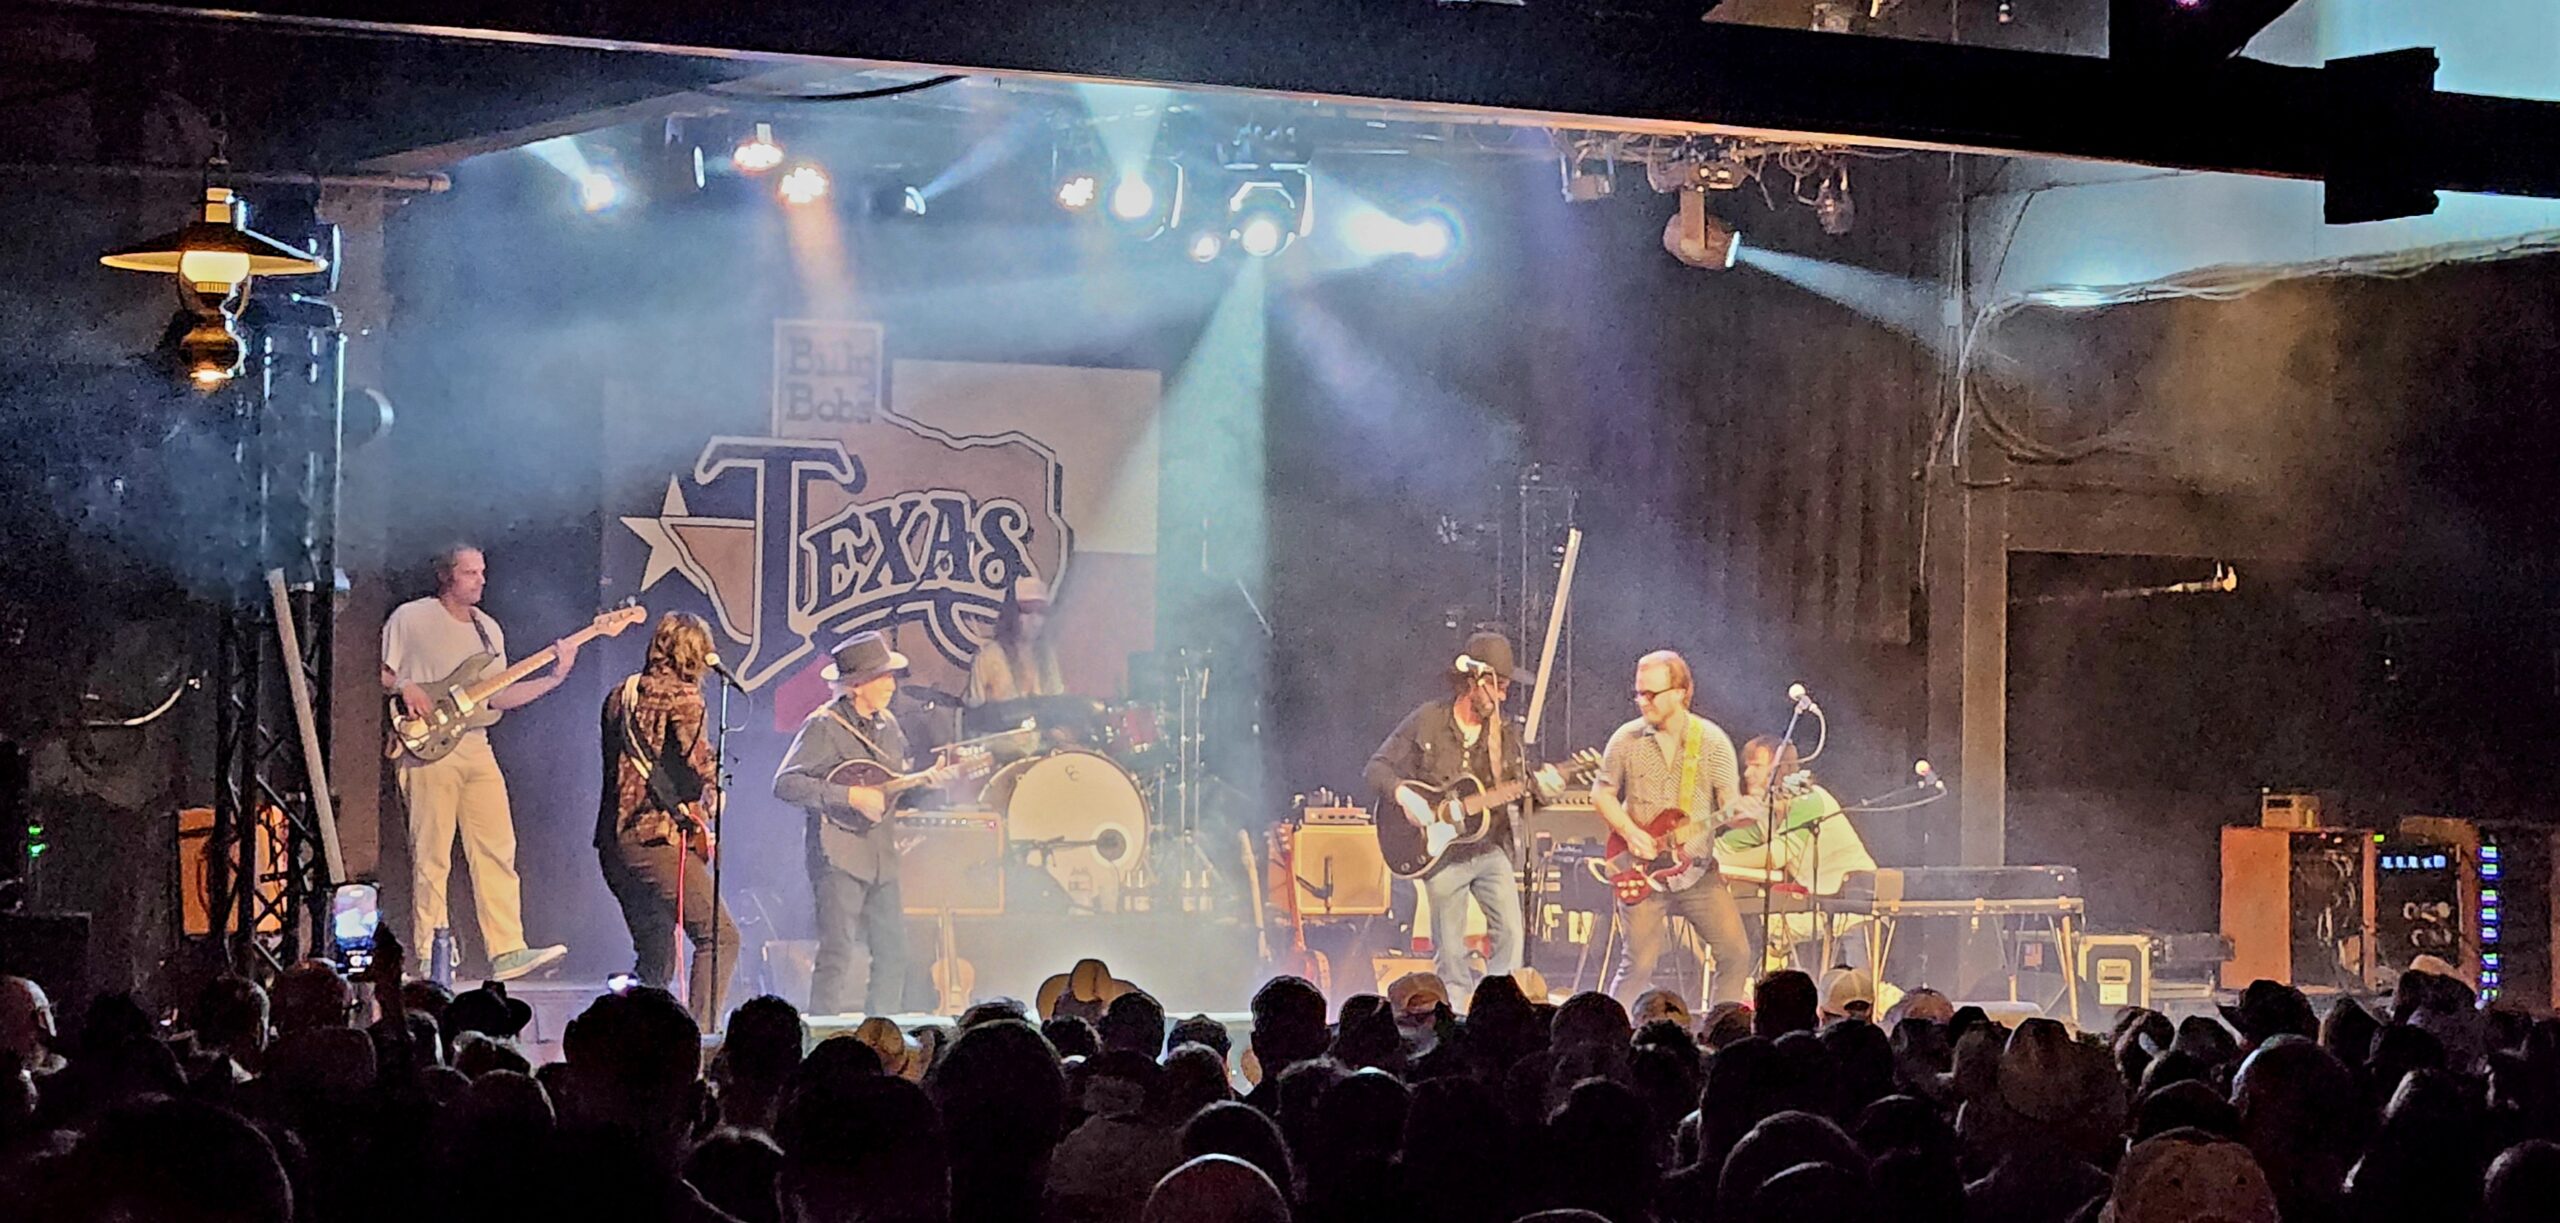 Ryan Bingham at Billy Bob's Texas on 02/03/23. Photo by: Matthew McGuire